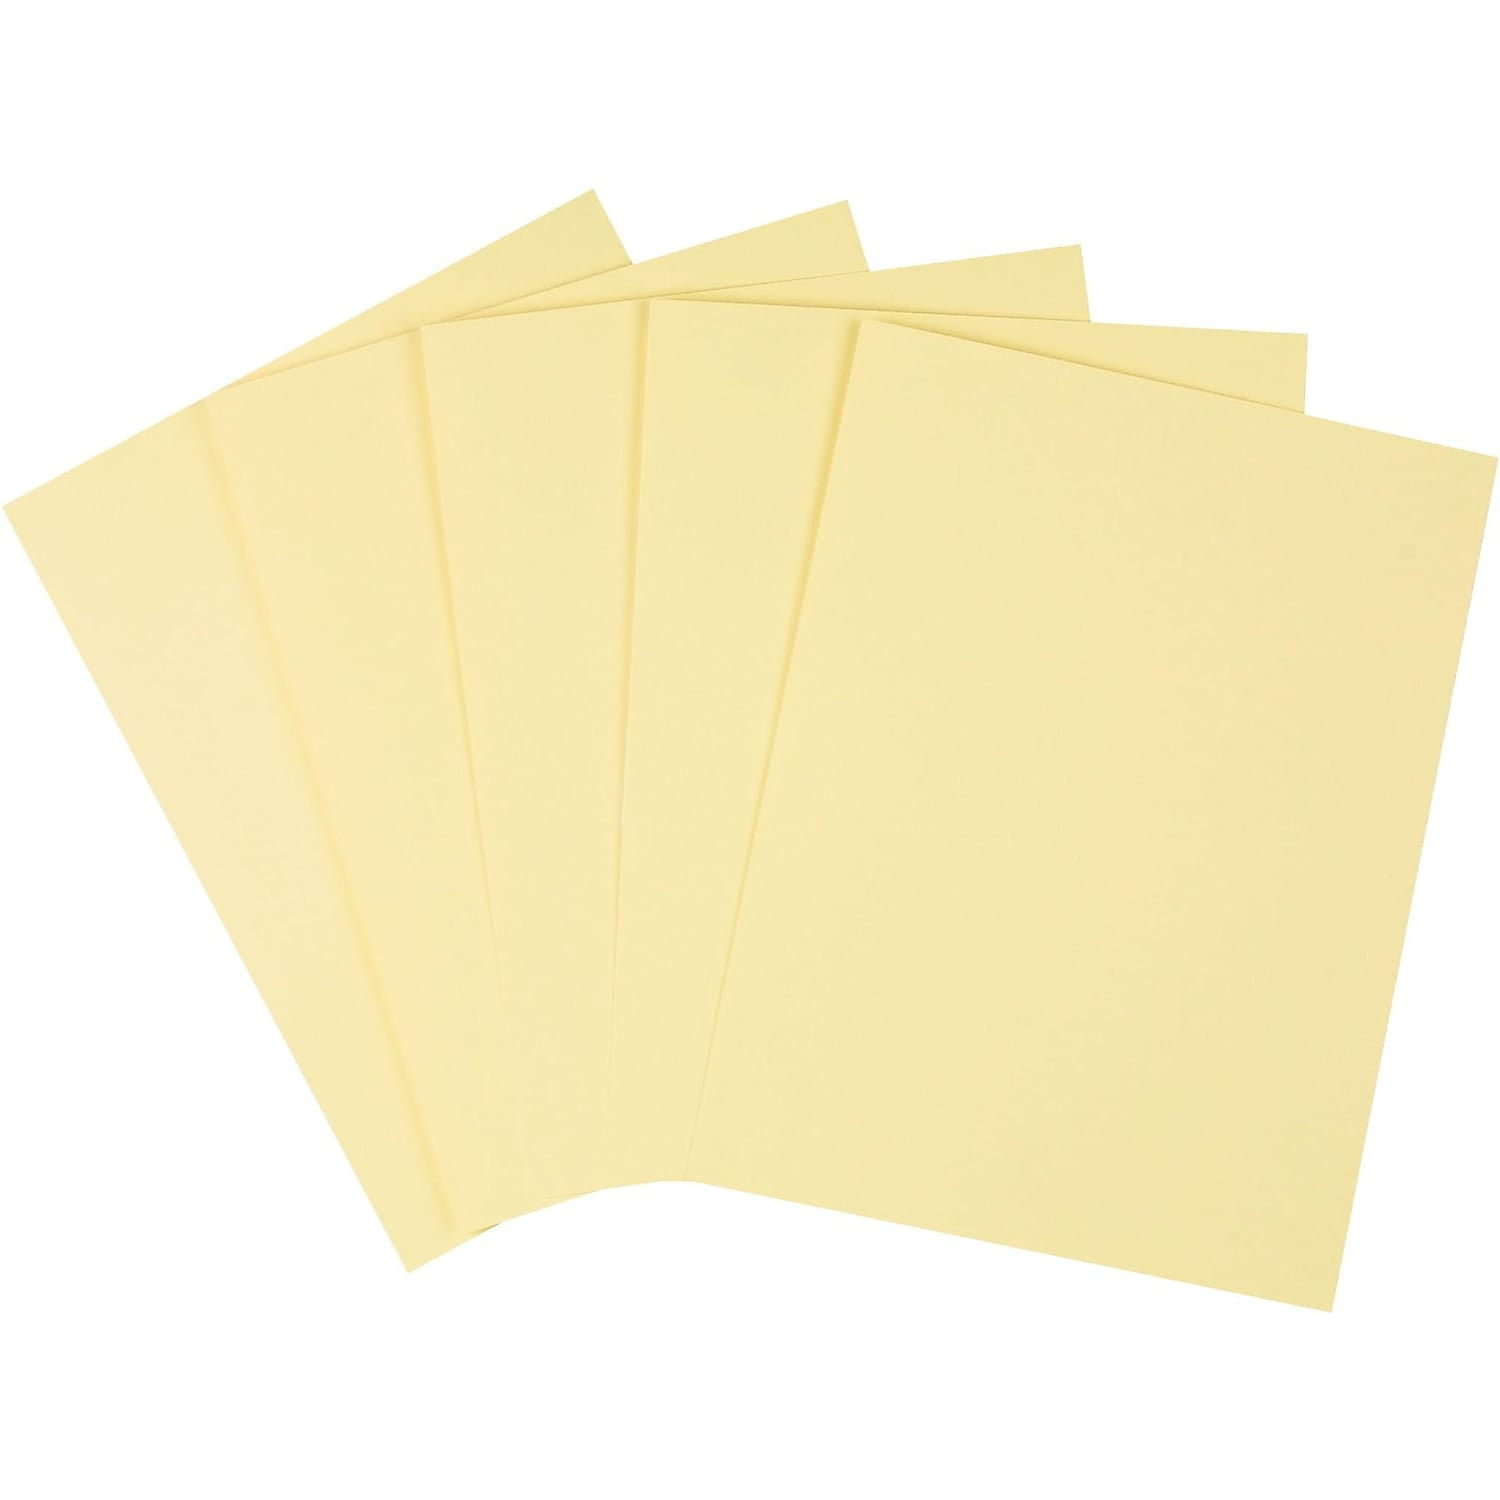 Staples Cardstock Paper 110 lbs 8.5 x 11 Blue 250/Pack (49702)